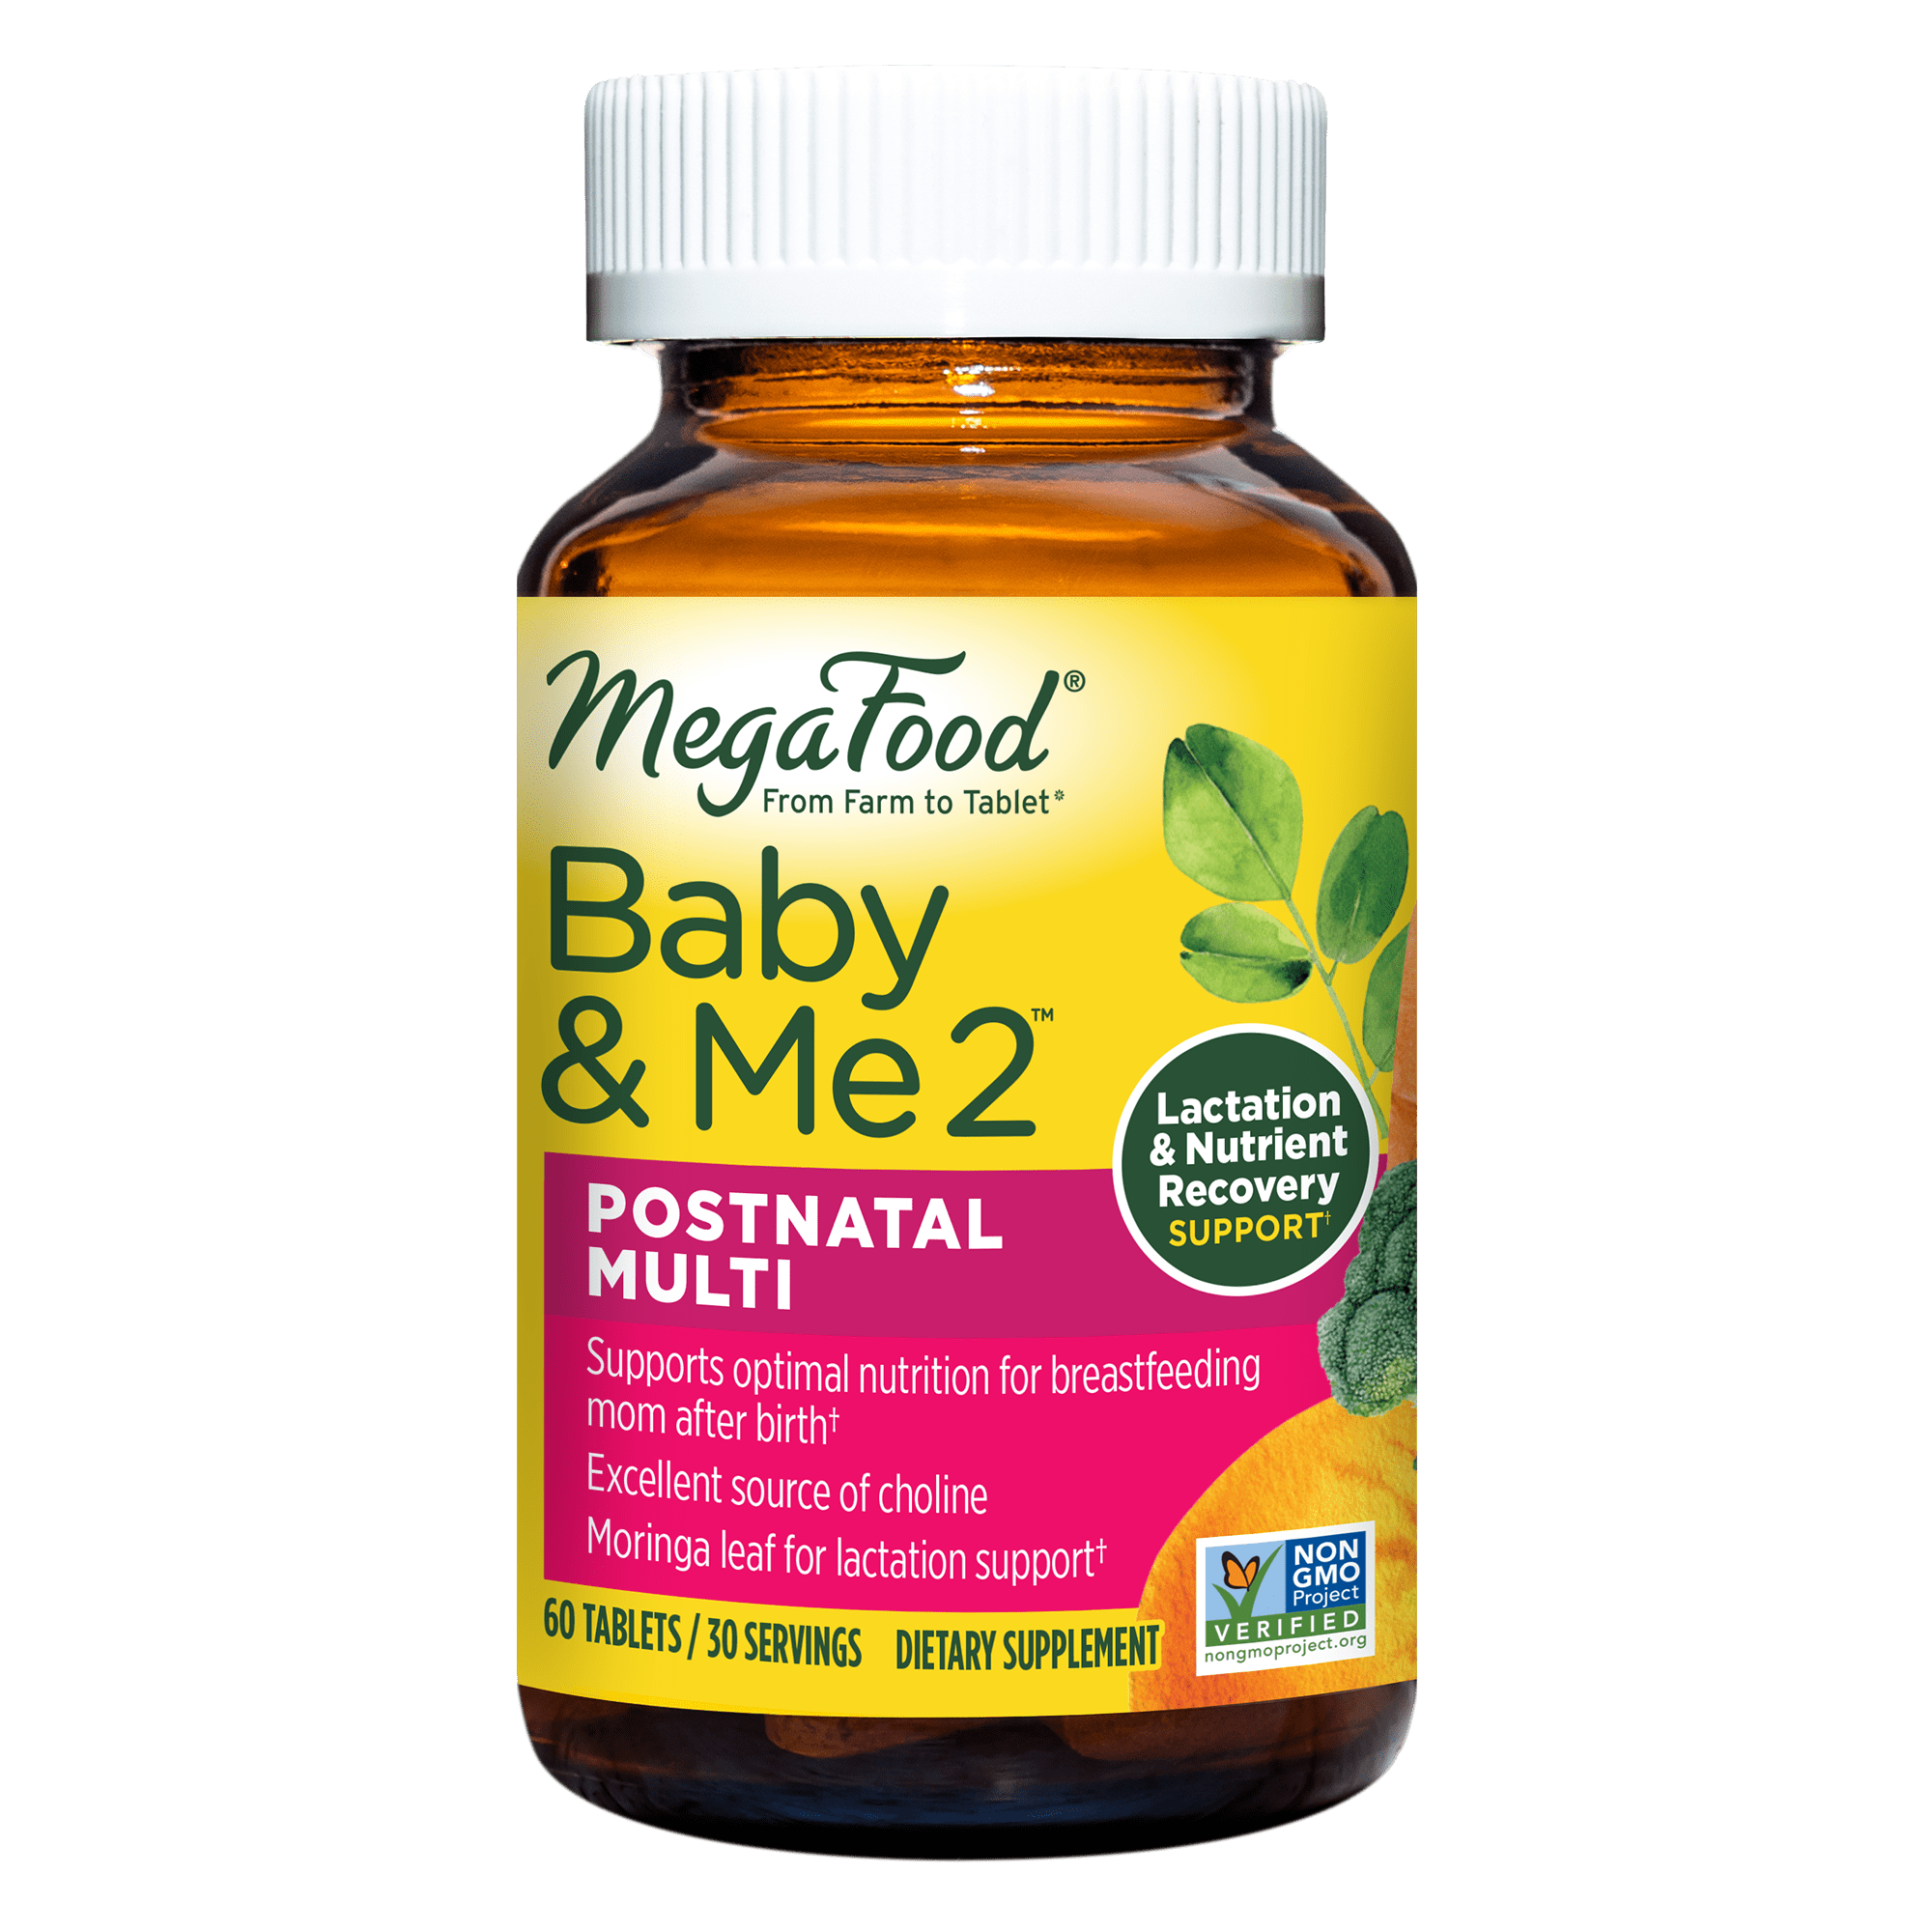 Buy MegaFood Baby and Me 2 Postnatal Multi at